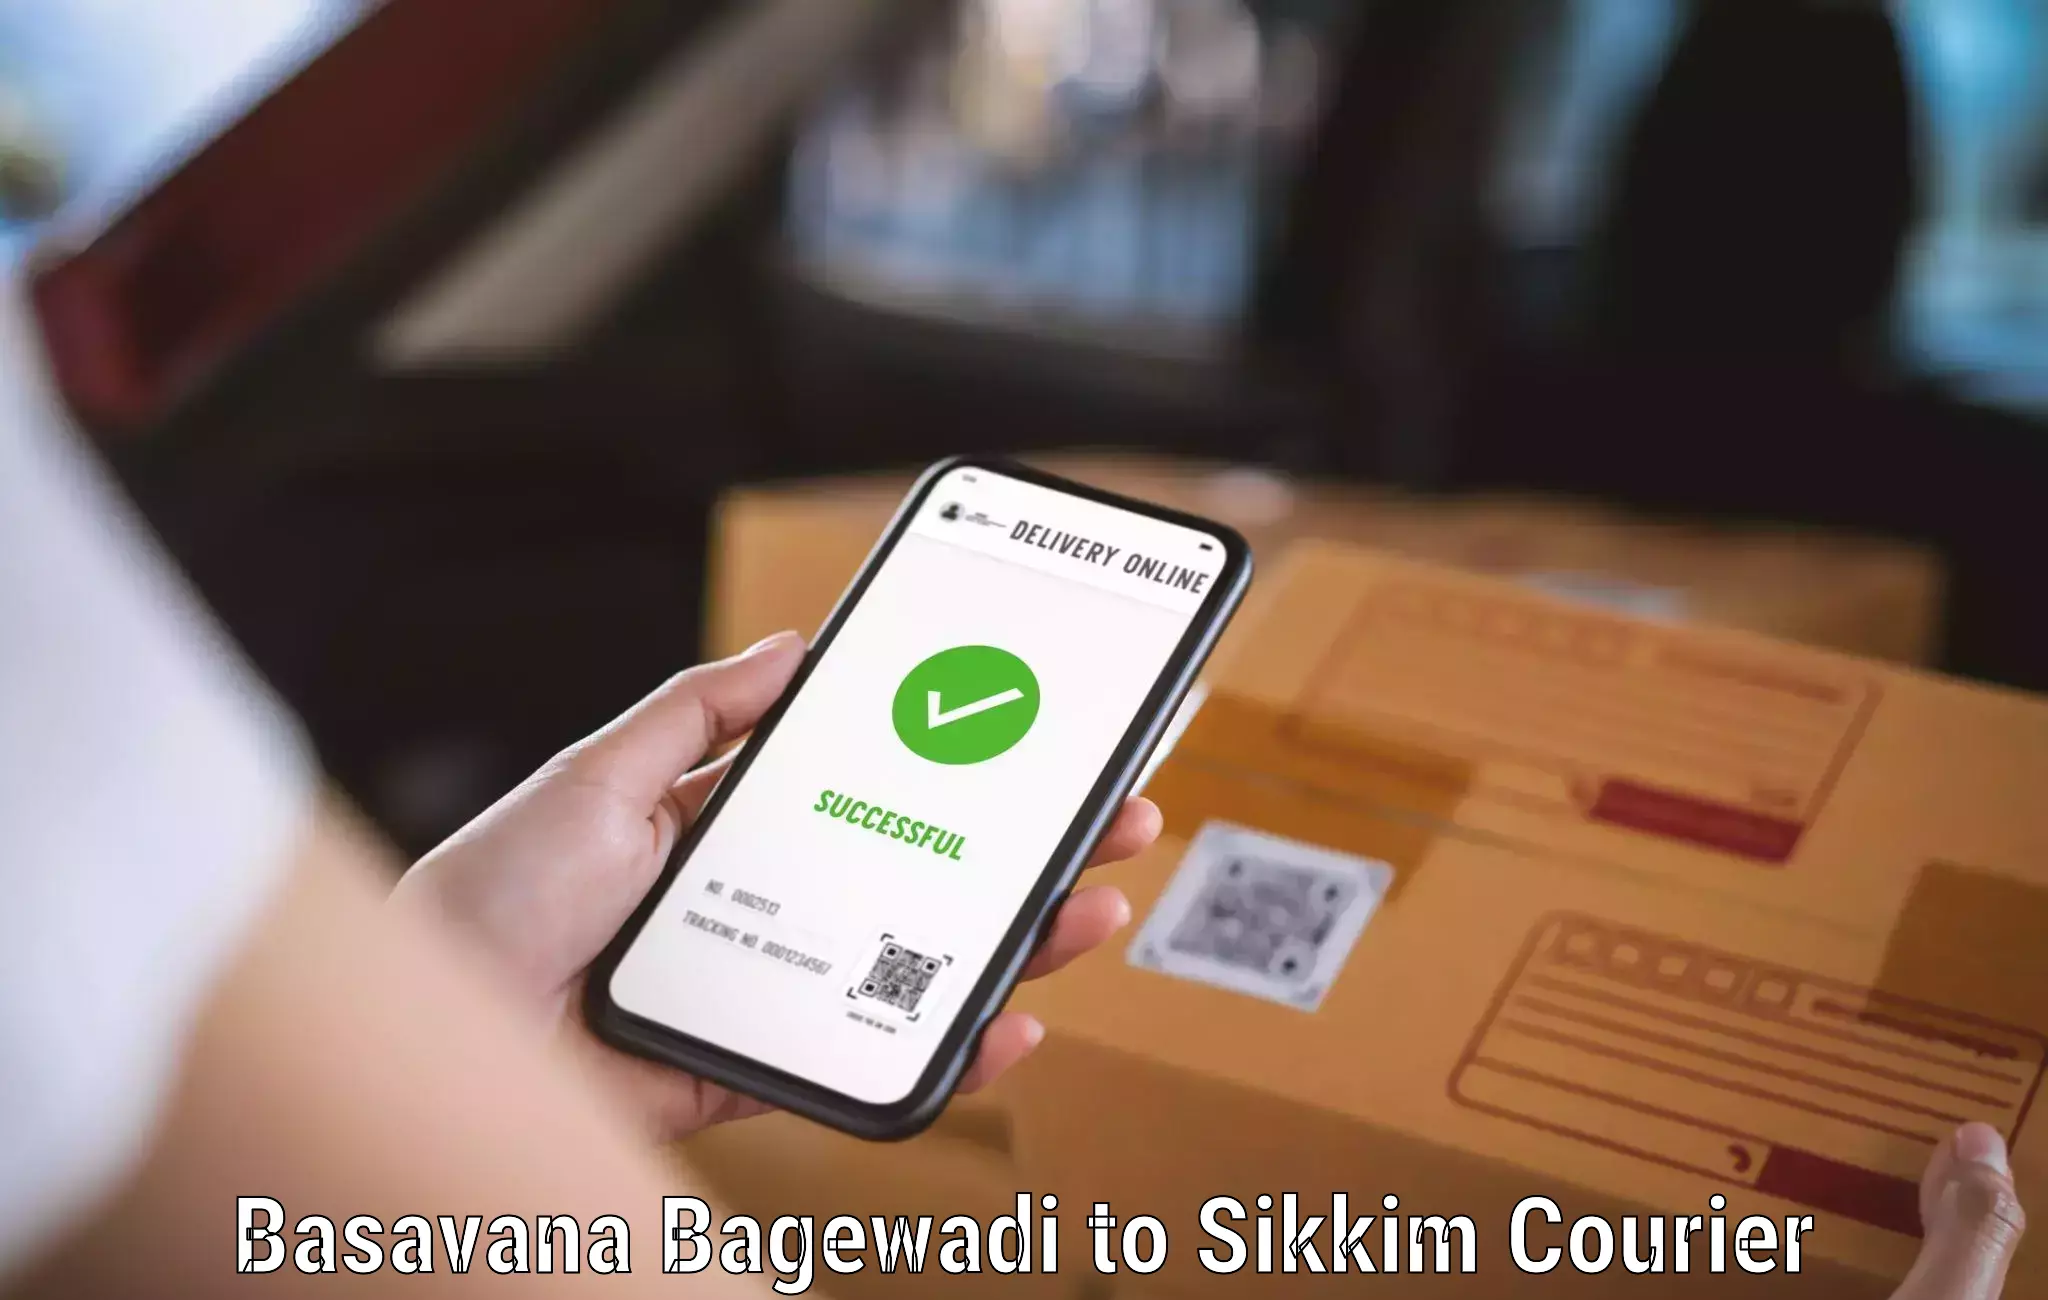 State-of-the-art courier technology Basavana Bagewadi to Singtam